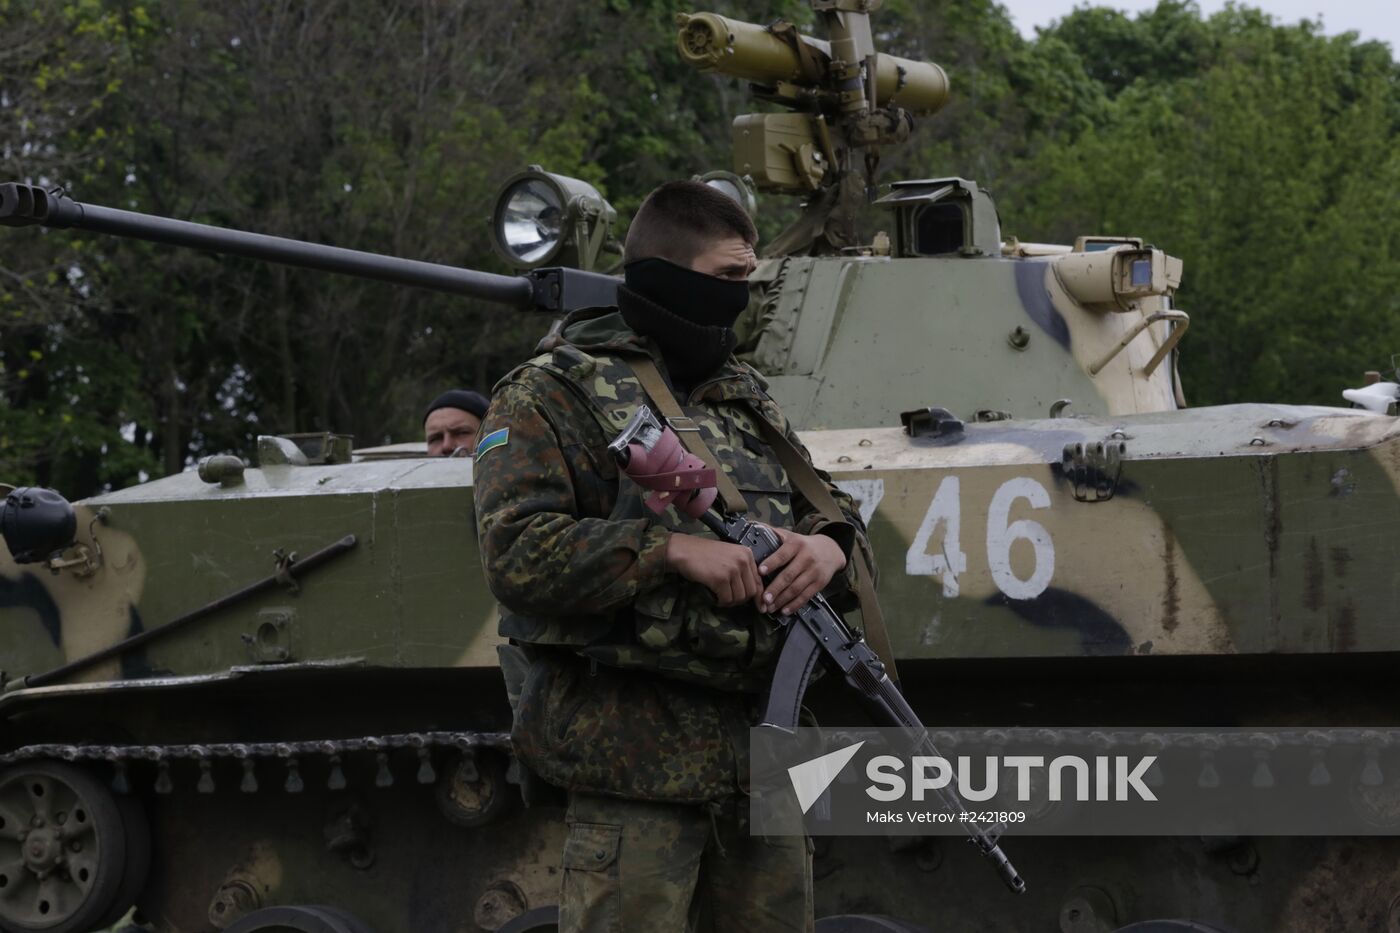 Ukrainian troops launch assault on Slavyansk